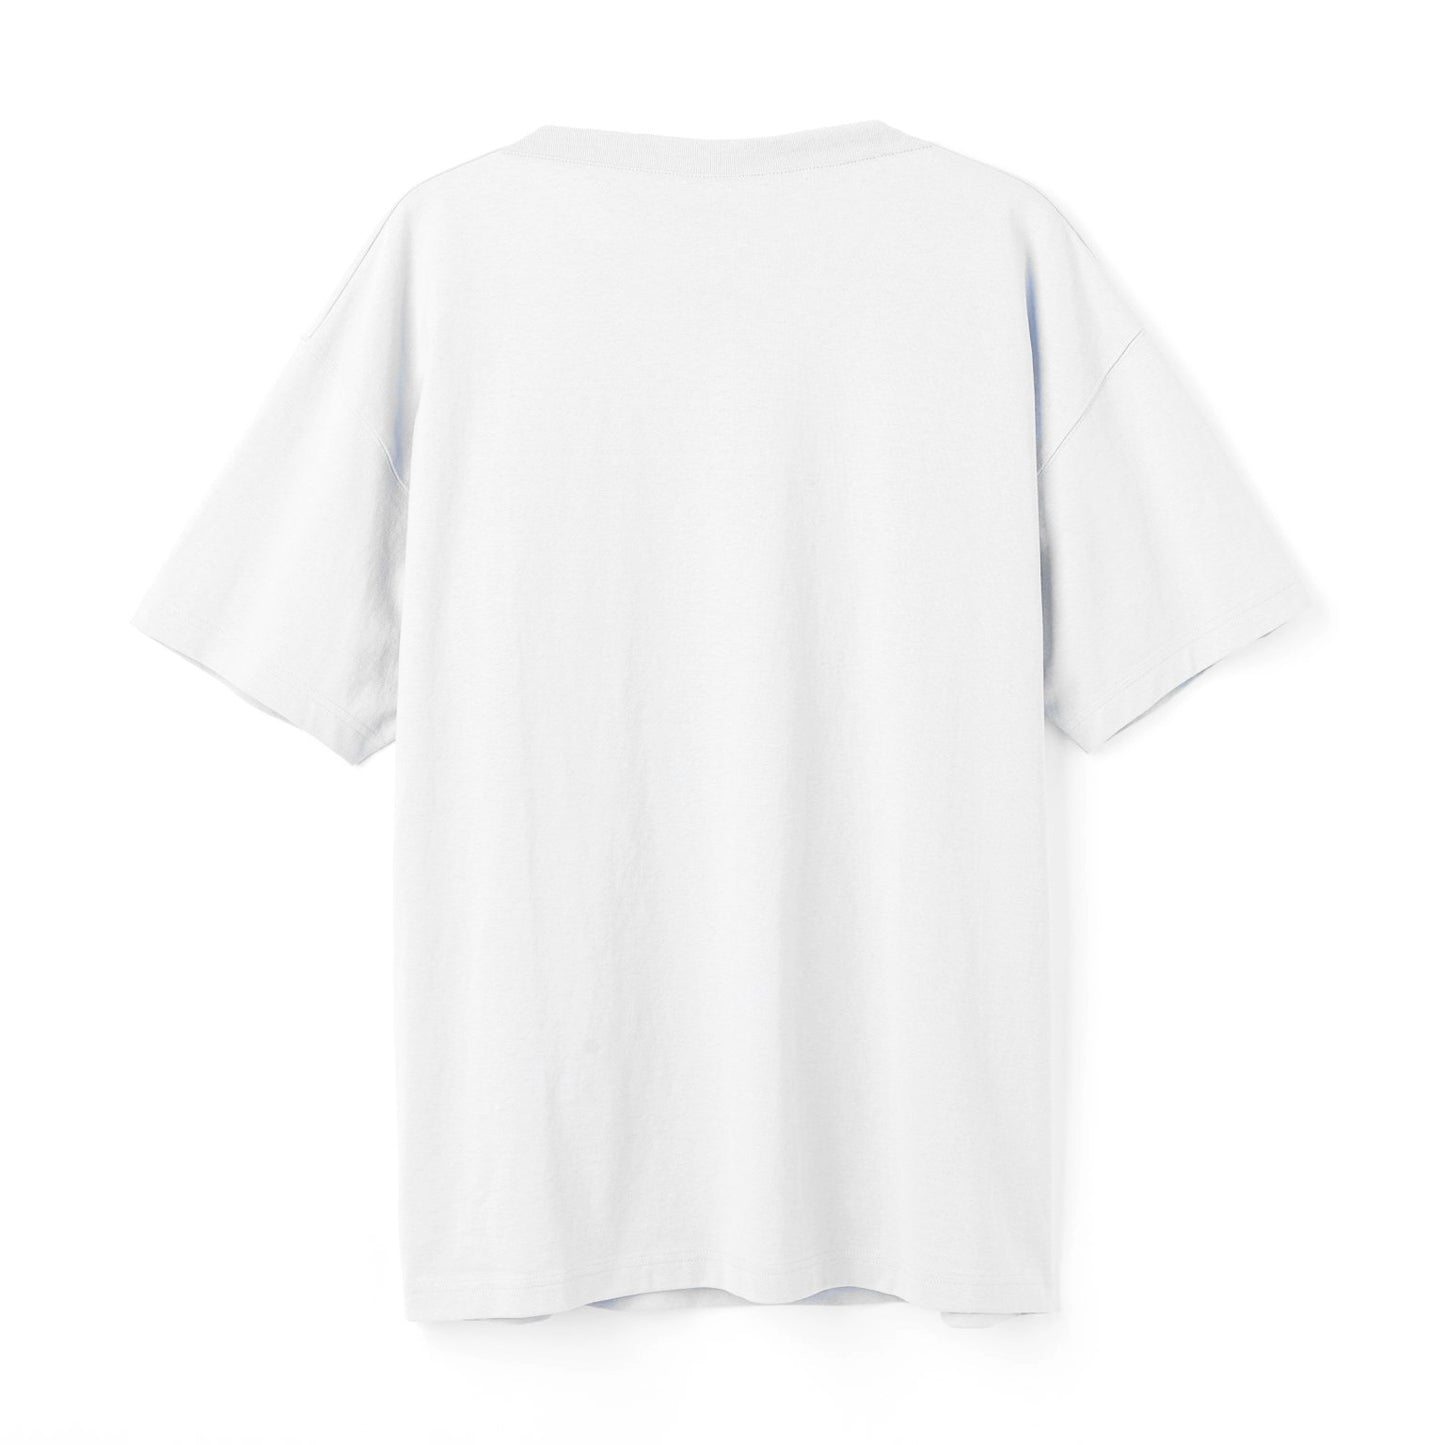 Veroconic Head Graphic Printed Oversized White Cotton T-shirt